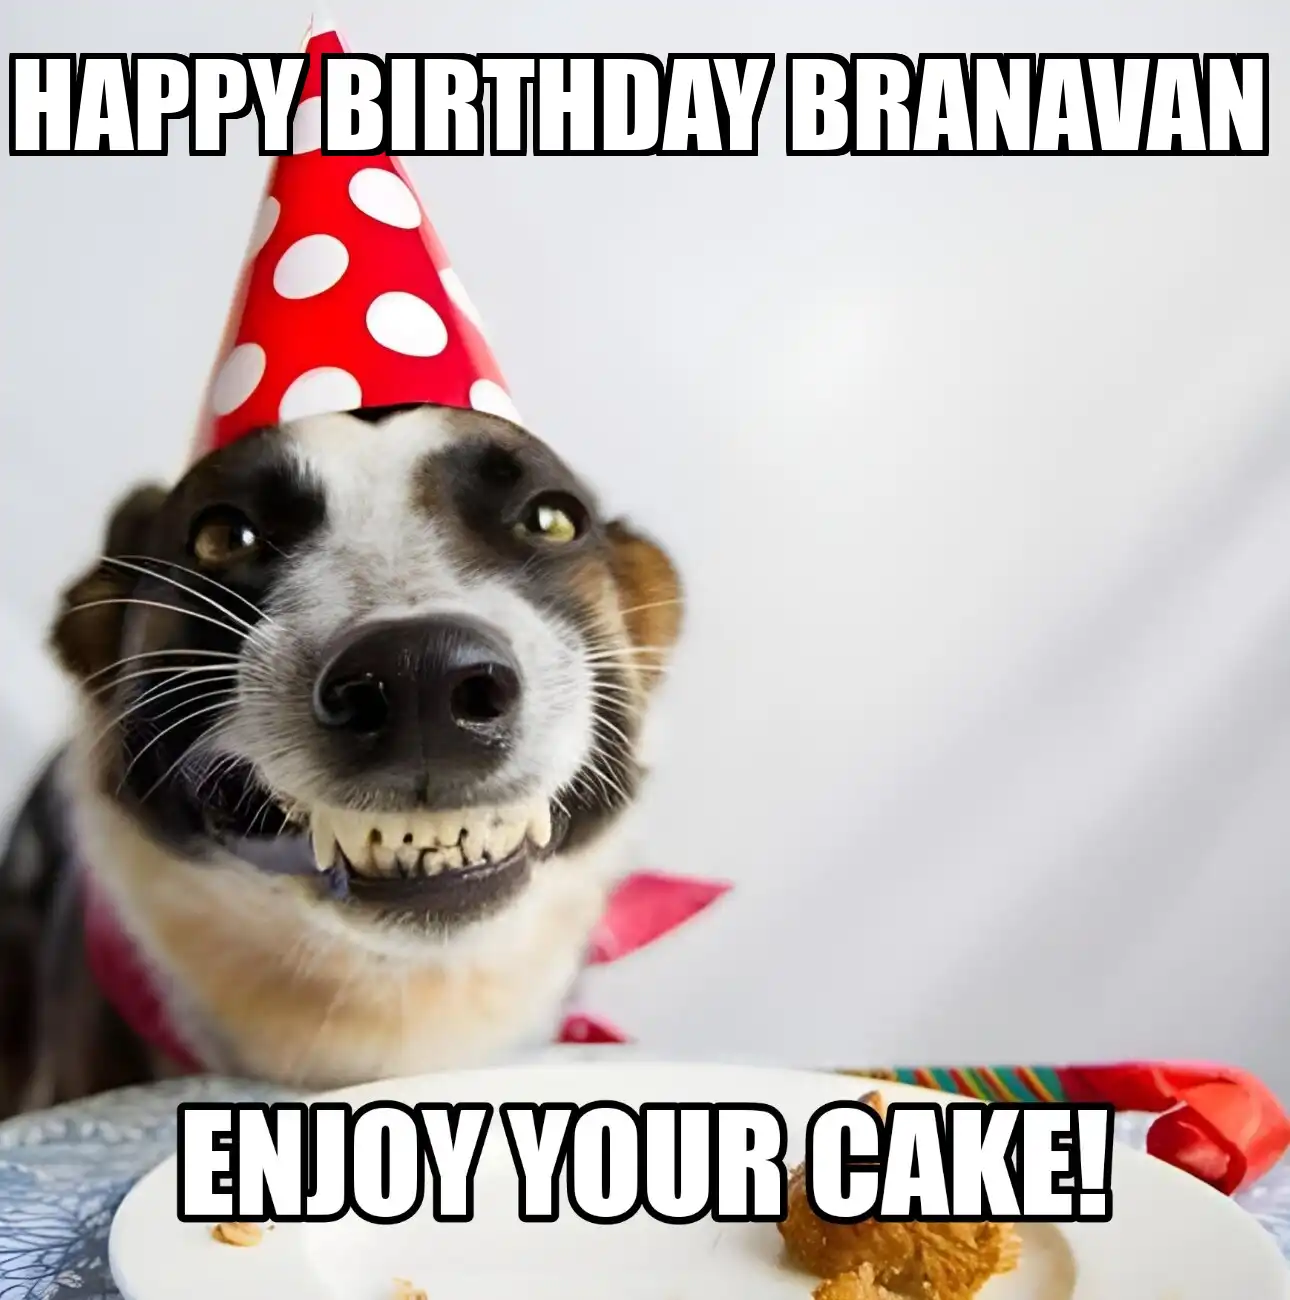 Happy Birthday Branavan Enjoy Your Cake Dog Meme